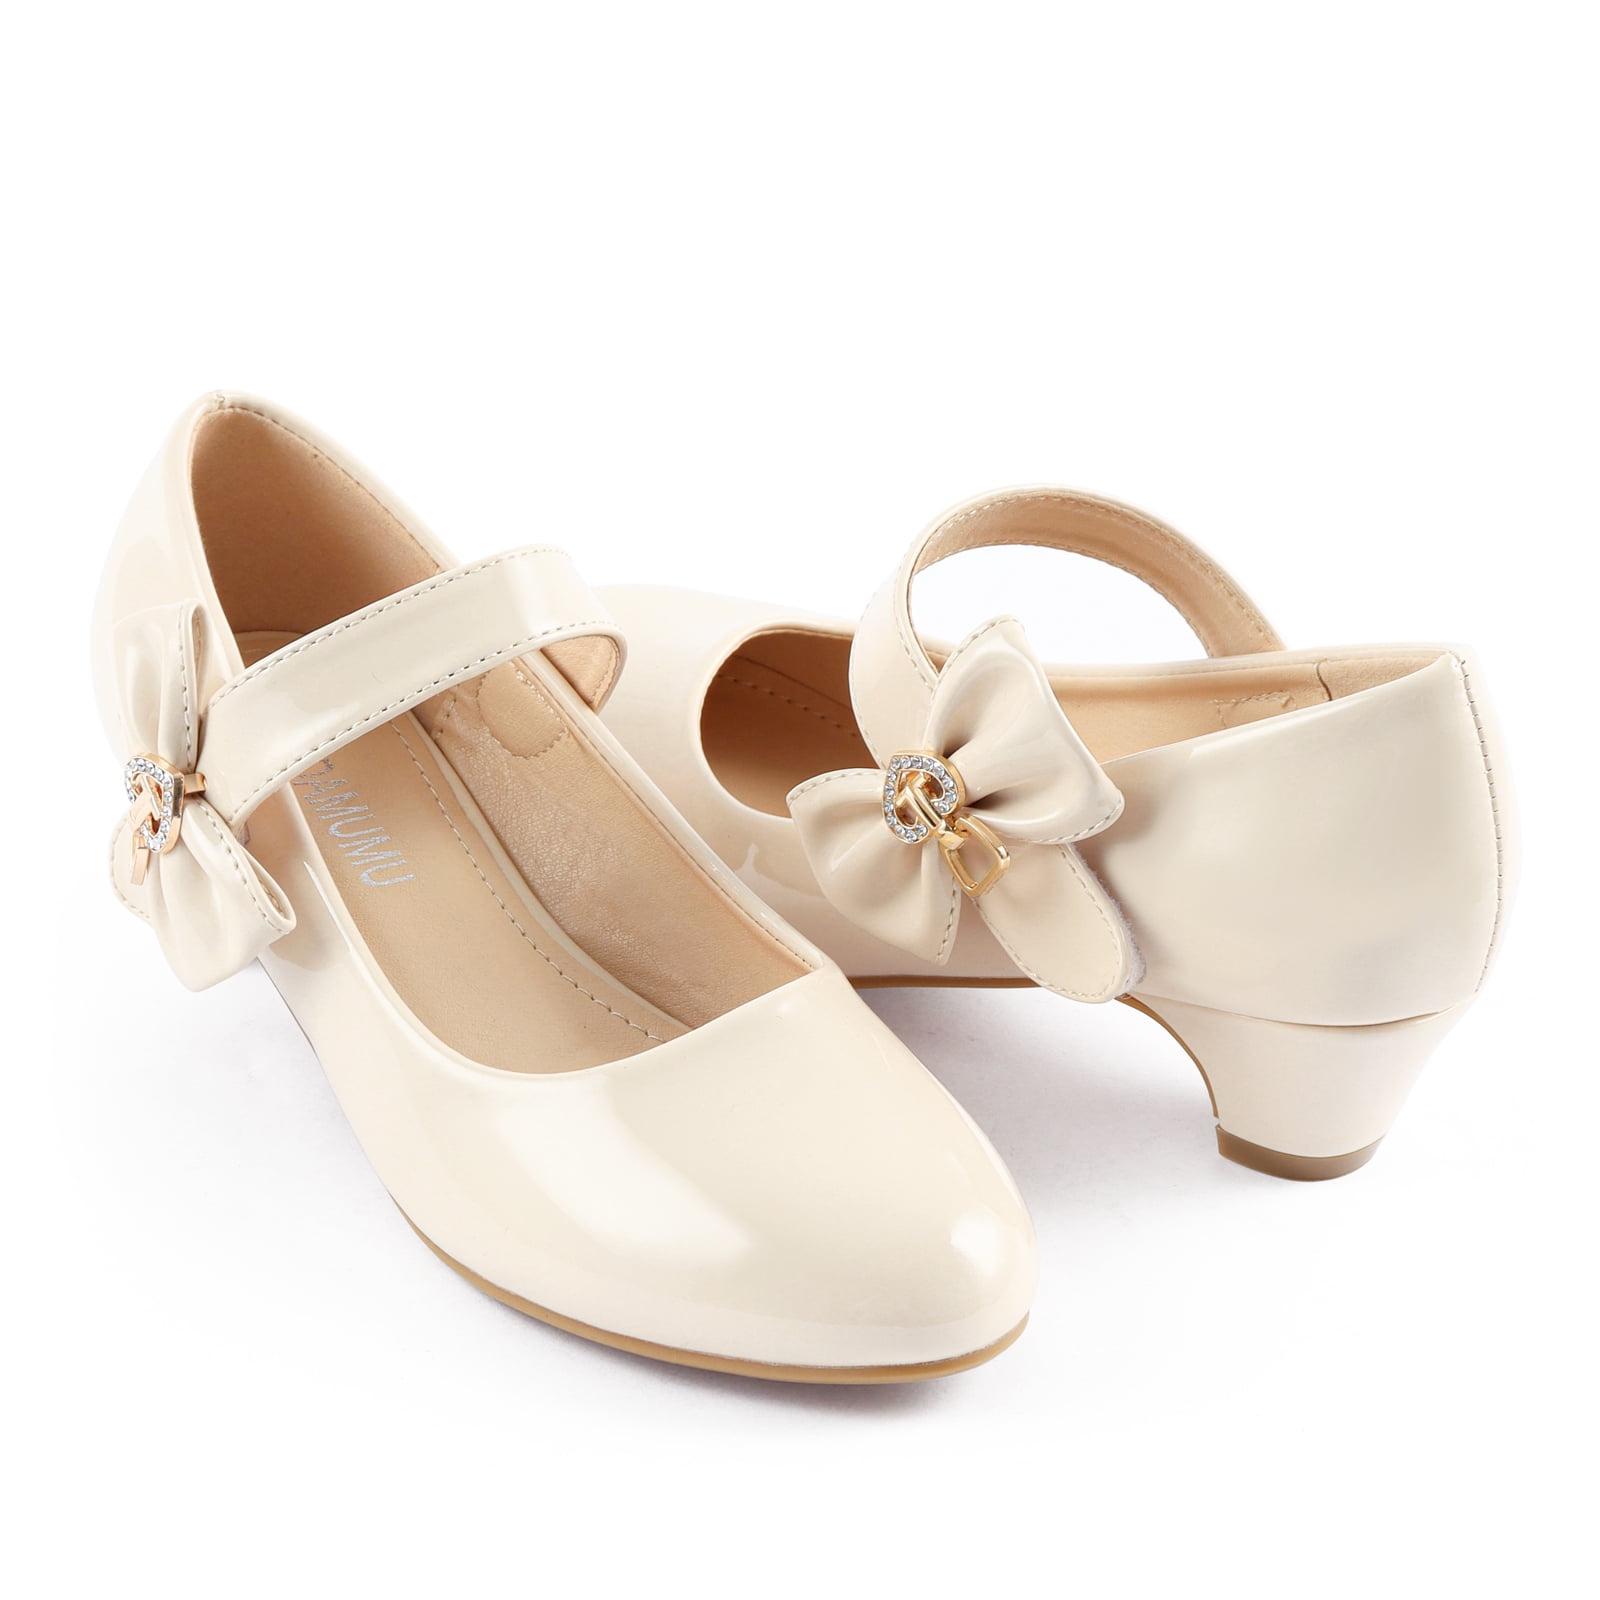 ADAMUMU Girls Dress Shoes Princess High Heel Mary Jane Low Heels Ballet ...